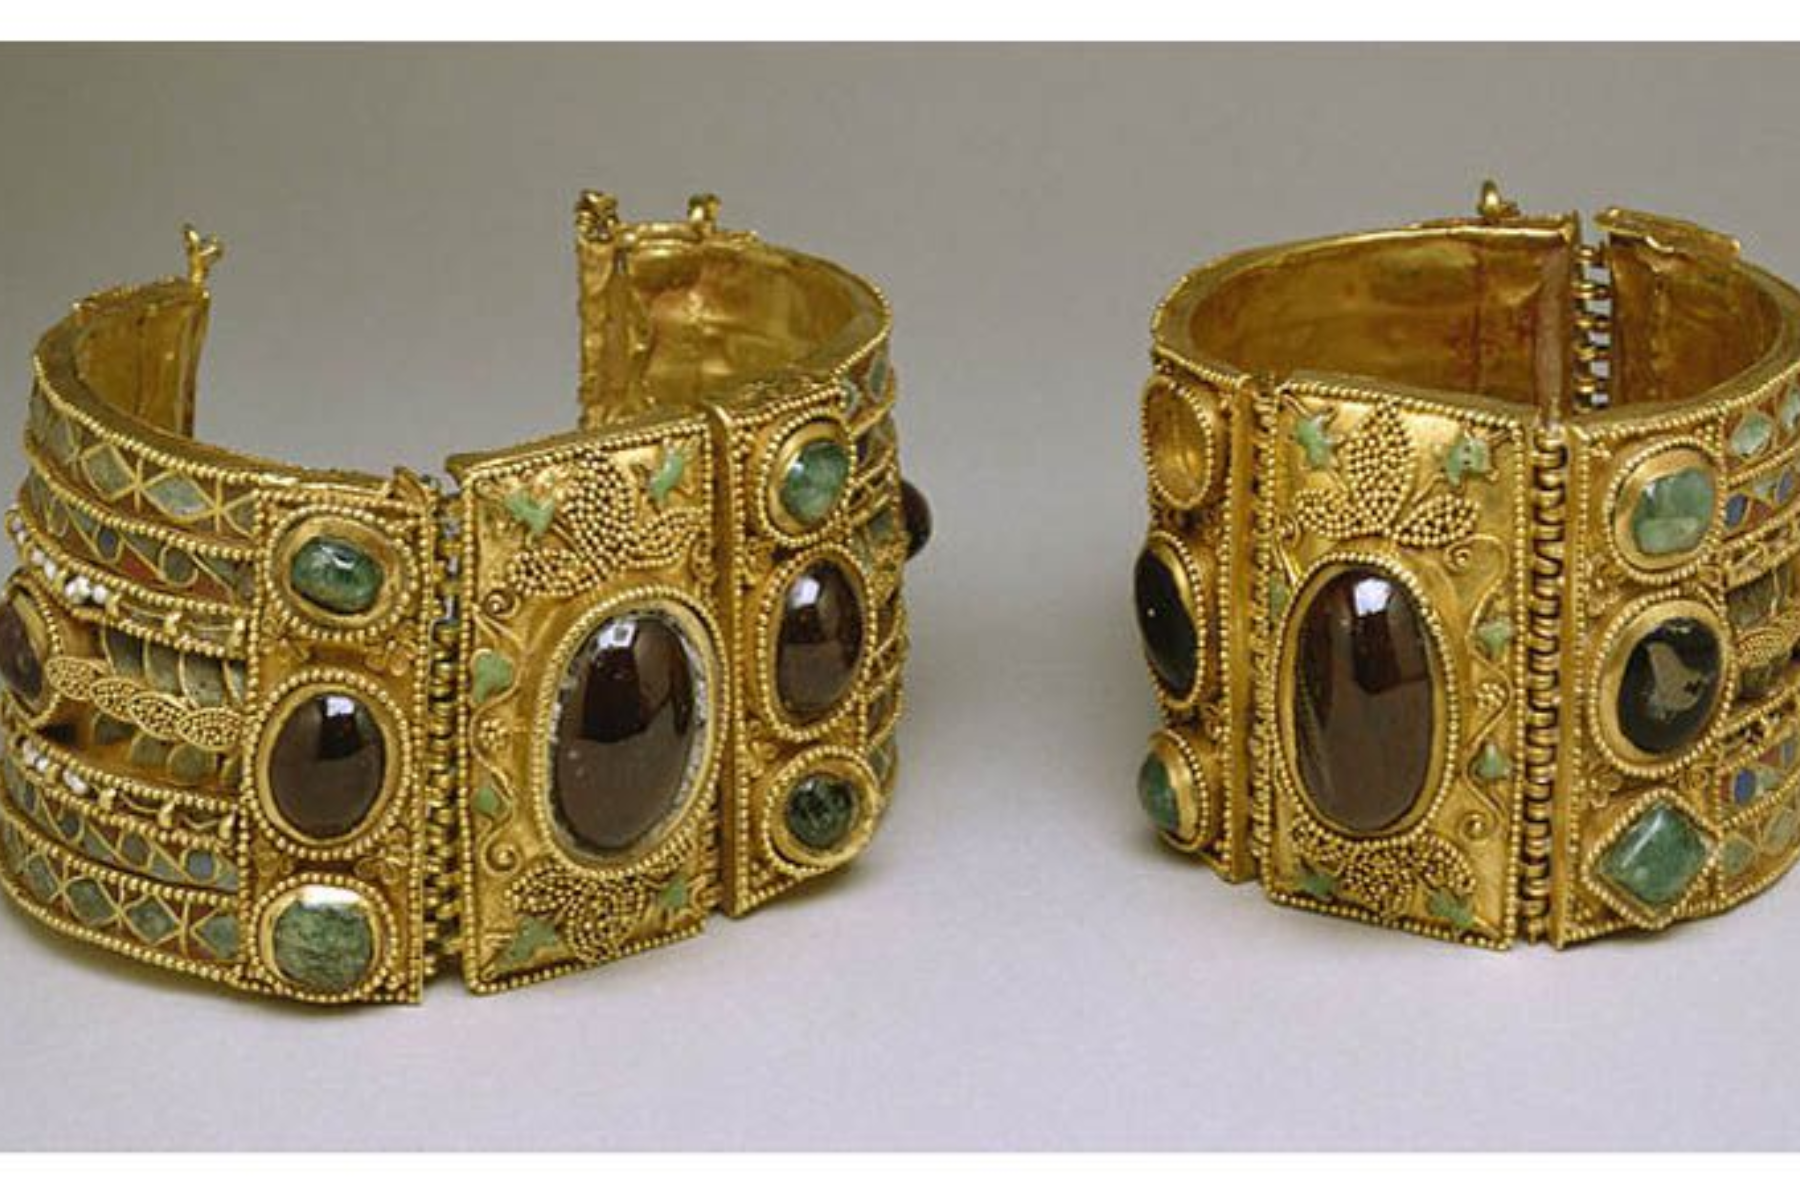 Two ancient gold bracelet cuffs